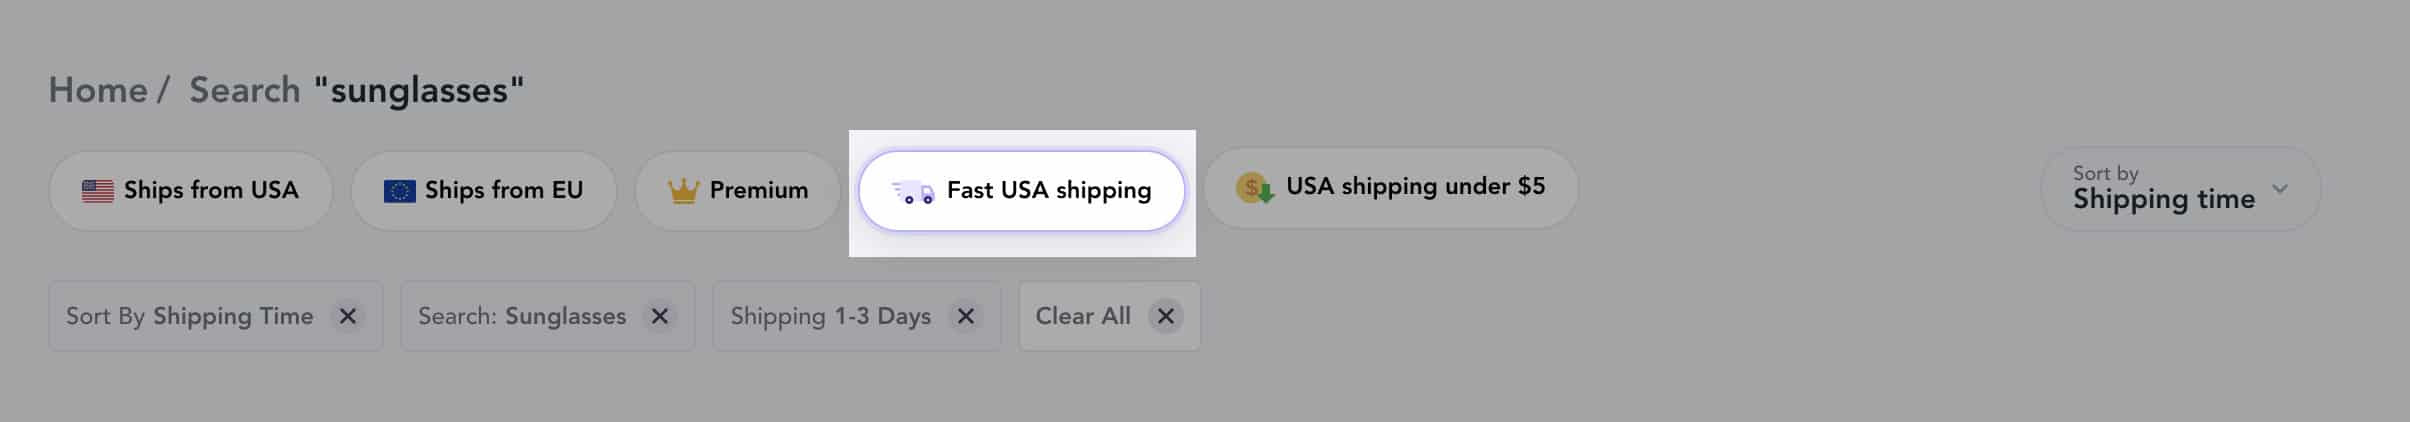 fast USA shipment